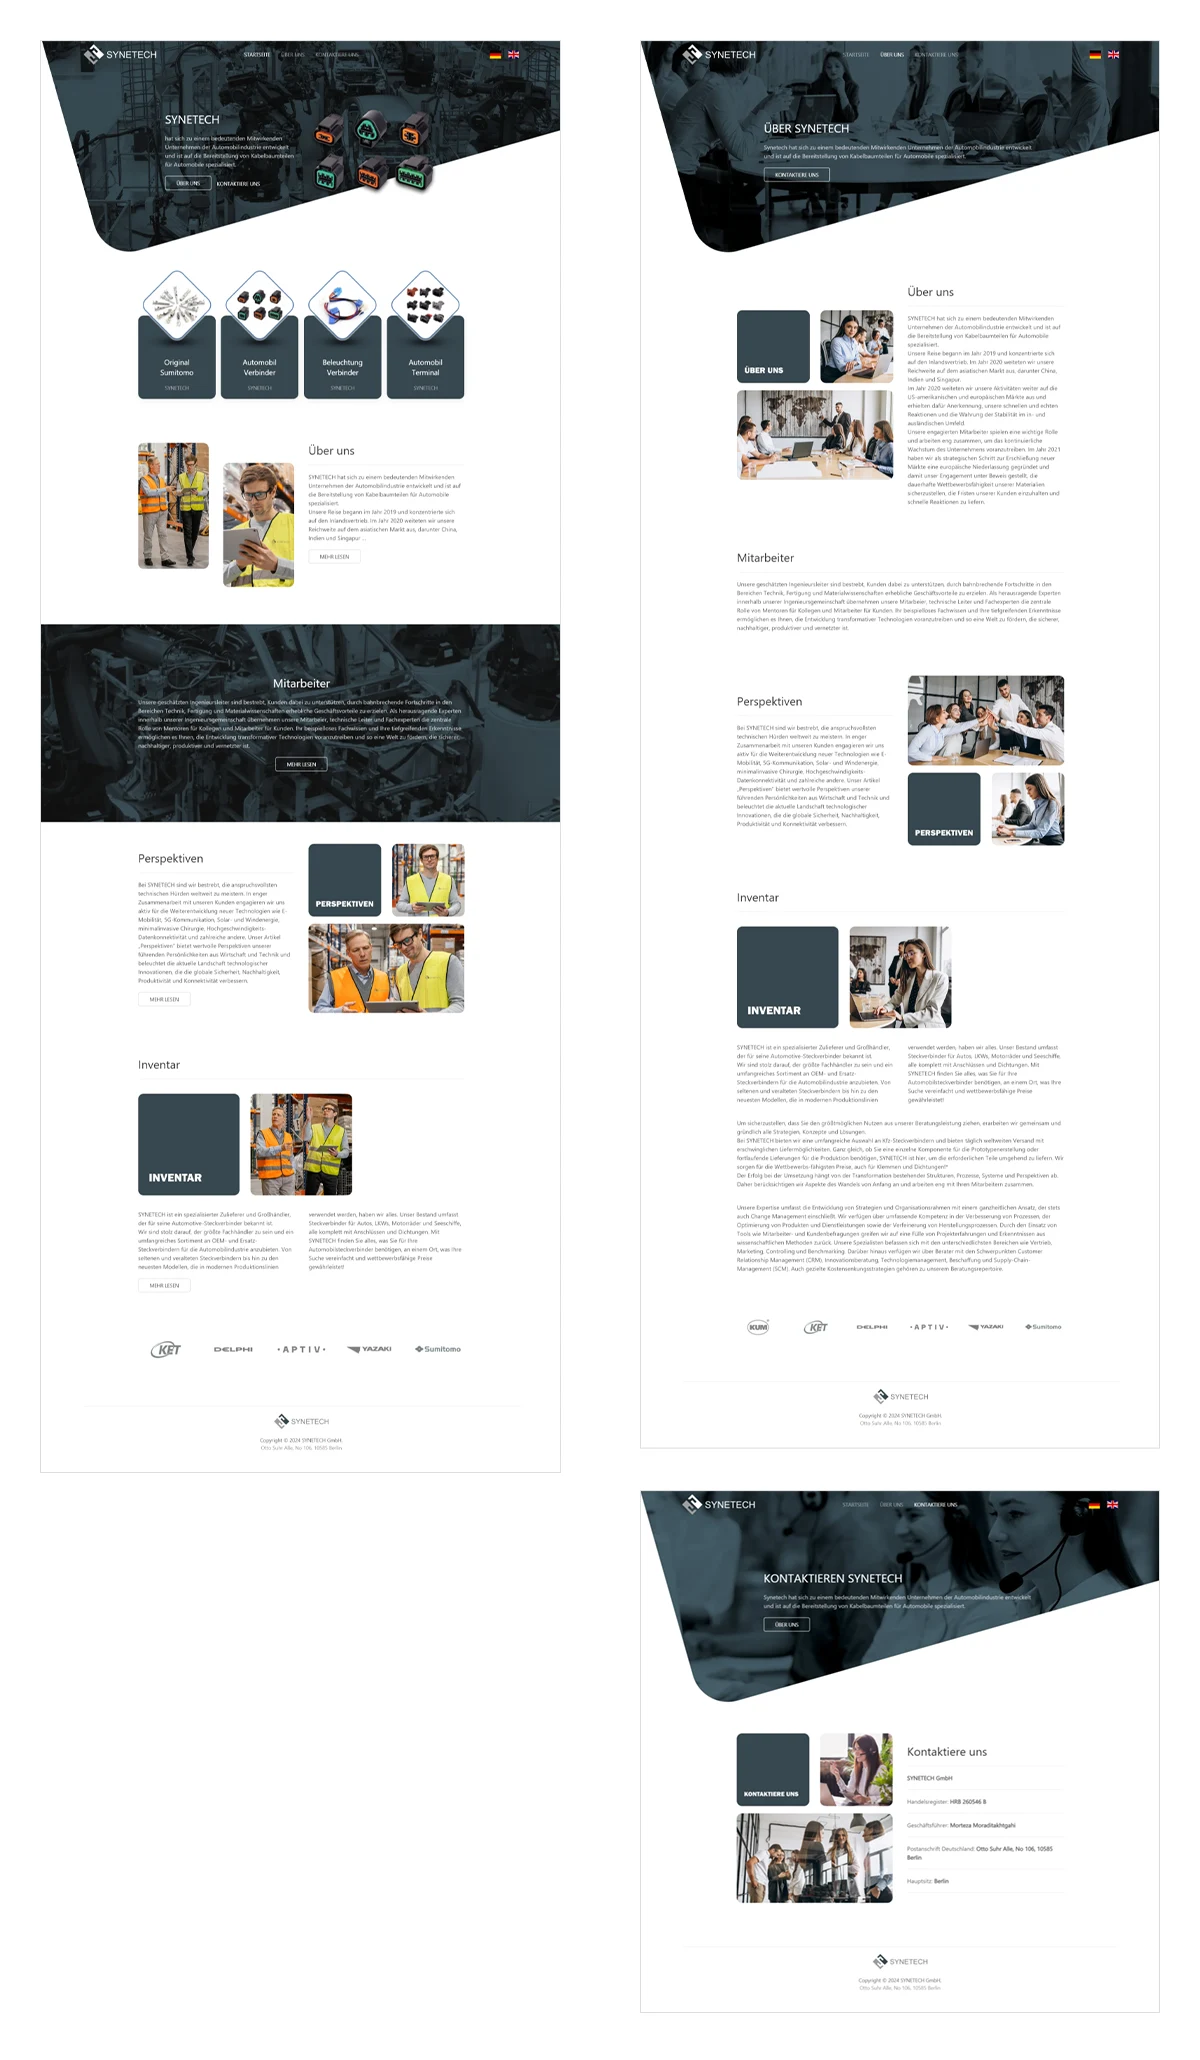 Synetech Company website development | Hossein Donyadideh